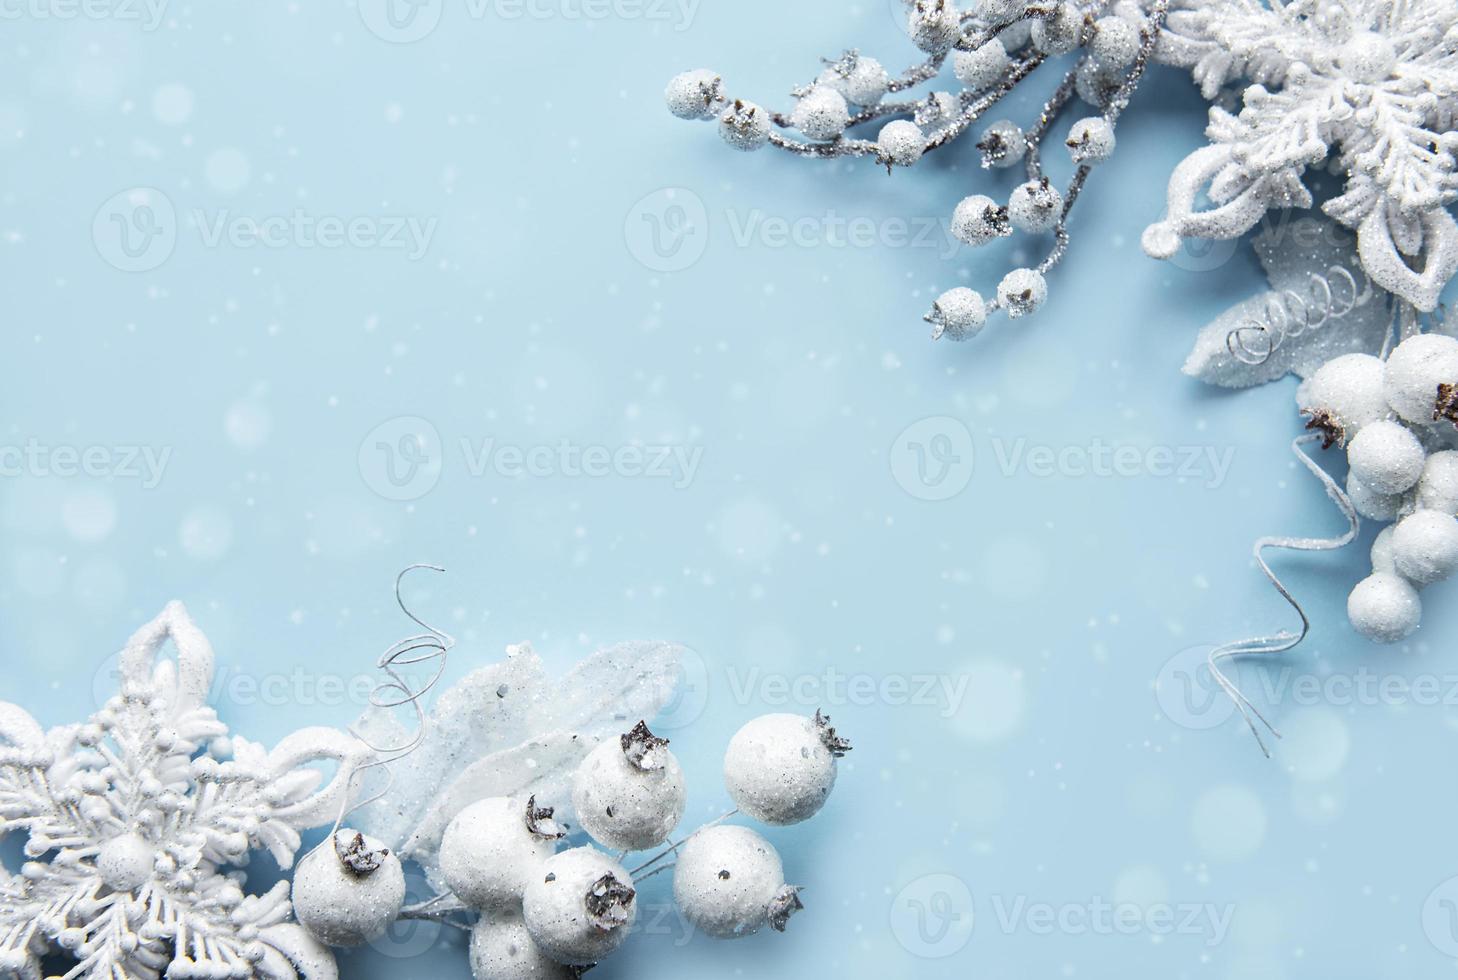 ram gjord av vita dekorationer på pastellblå bakgrund foto